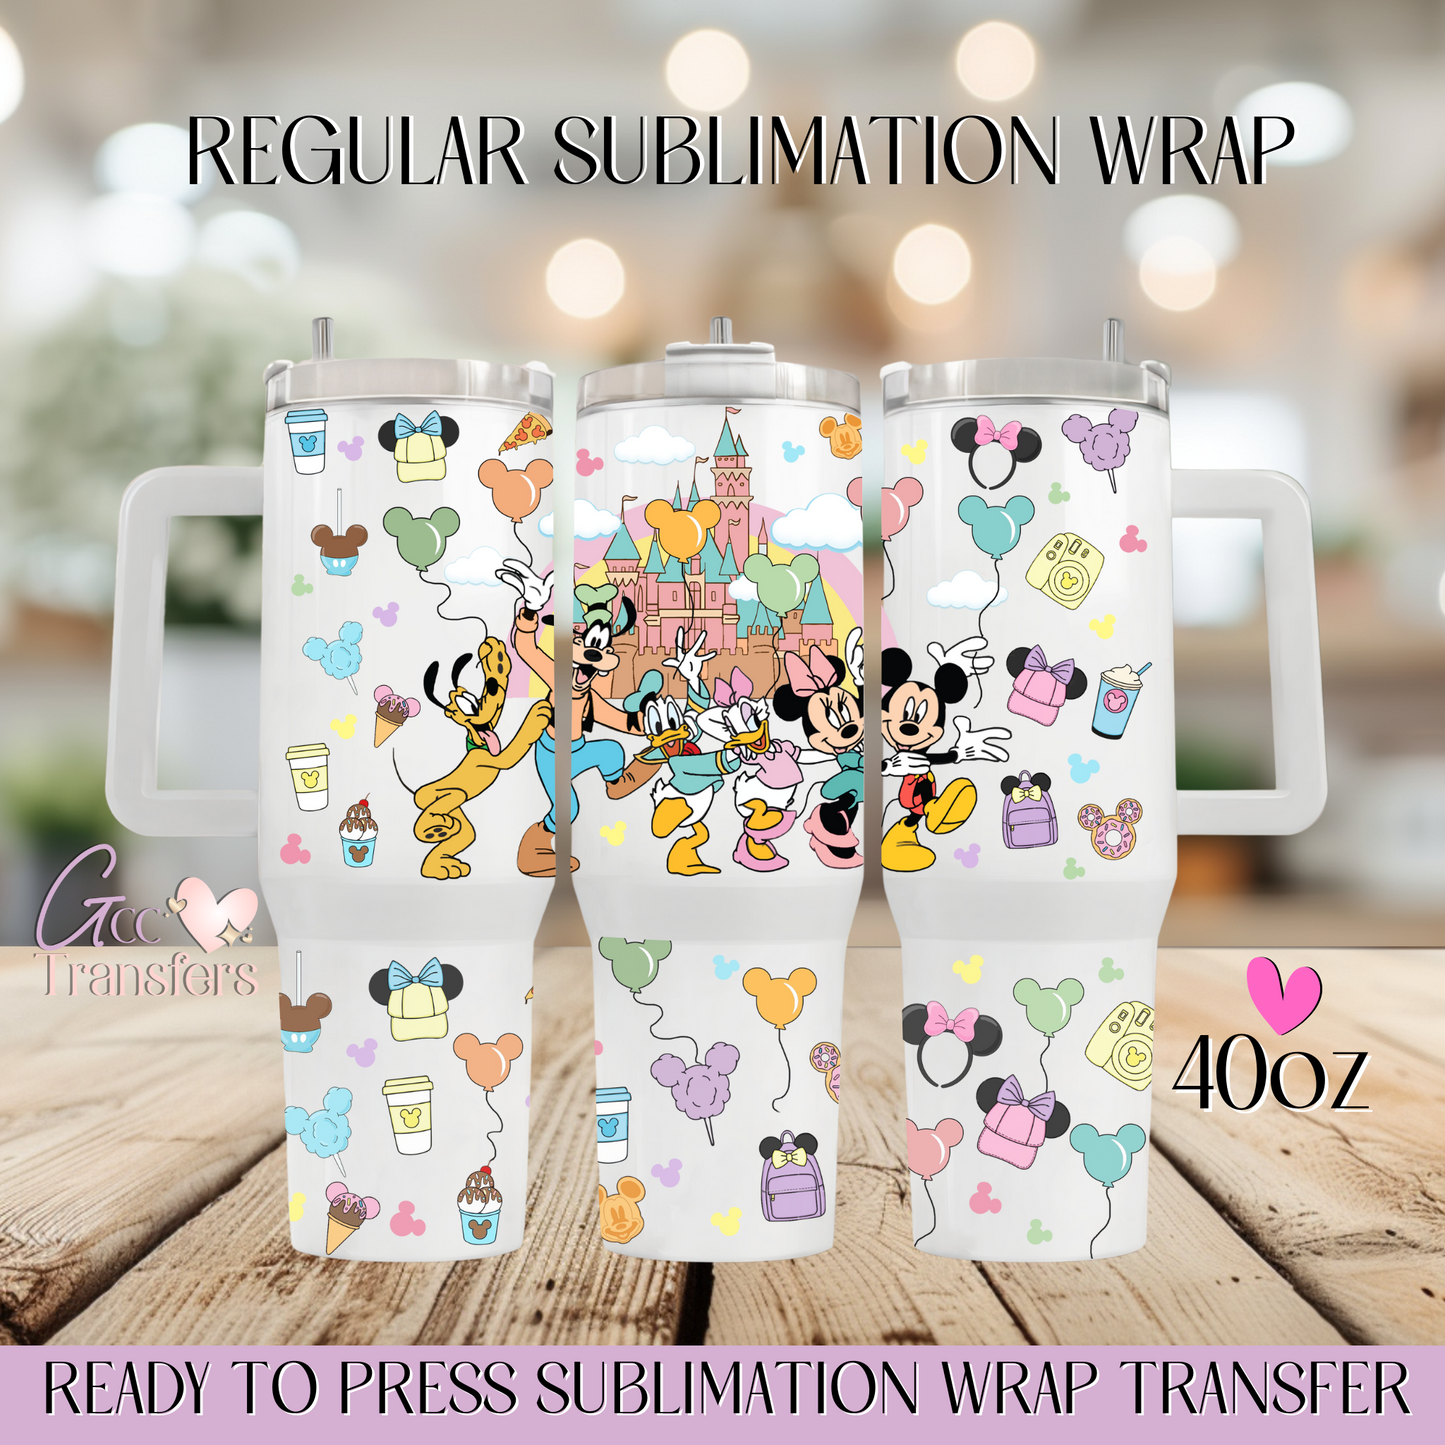 Mouse Magical Castle Balloons - 40oz Regular Sublimation Wrap